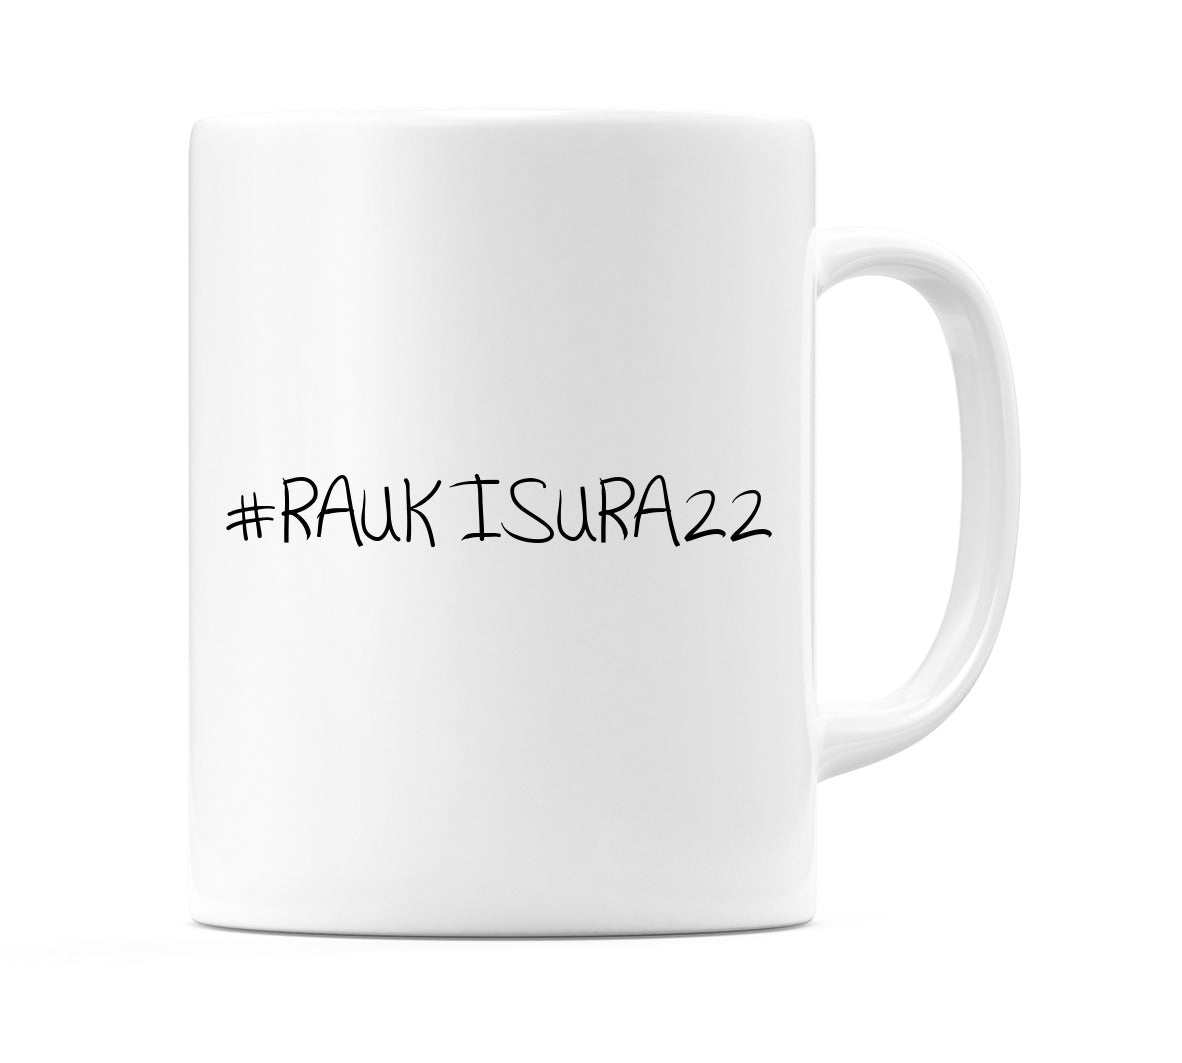 #RAUKISURA22 Mug